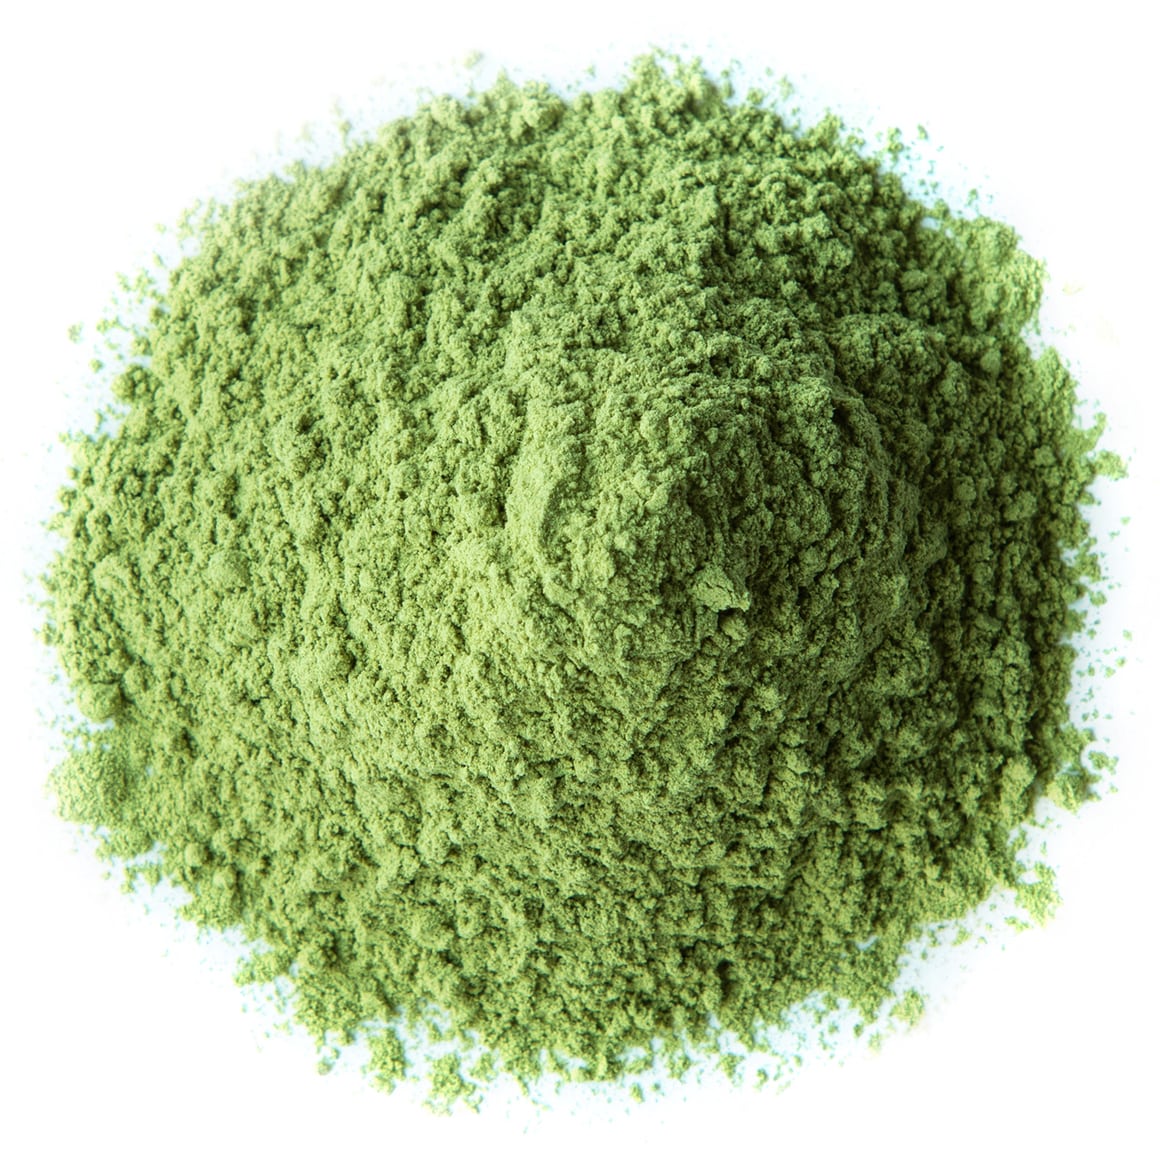 organic-supergreens-powder-mix-mainimage-min